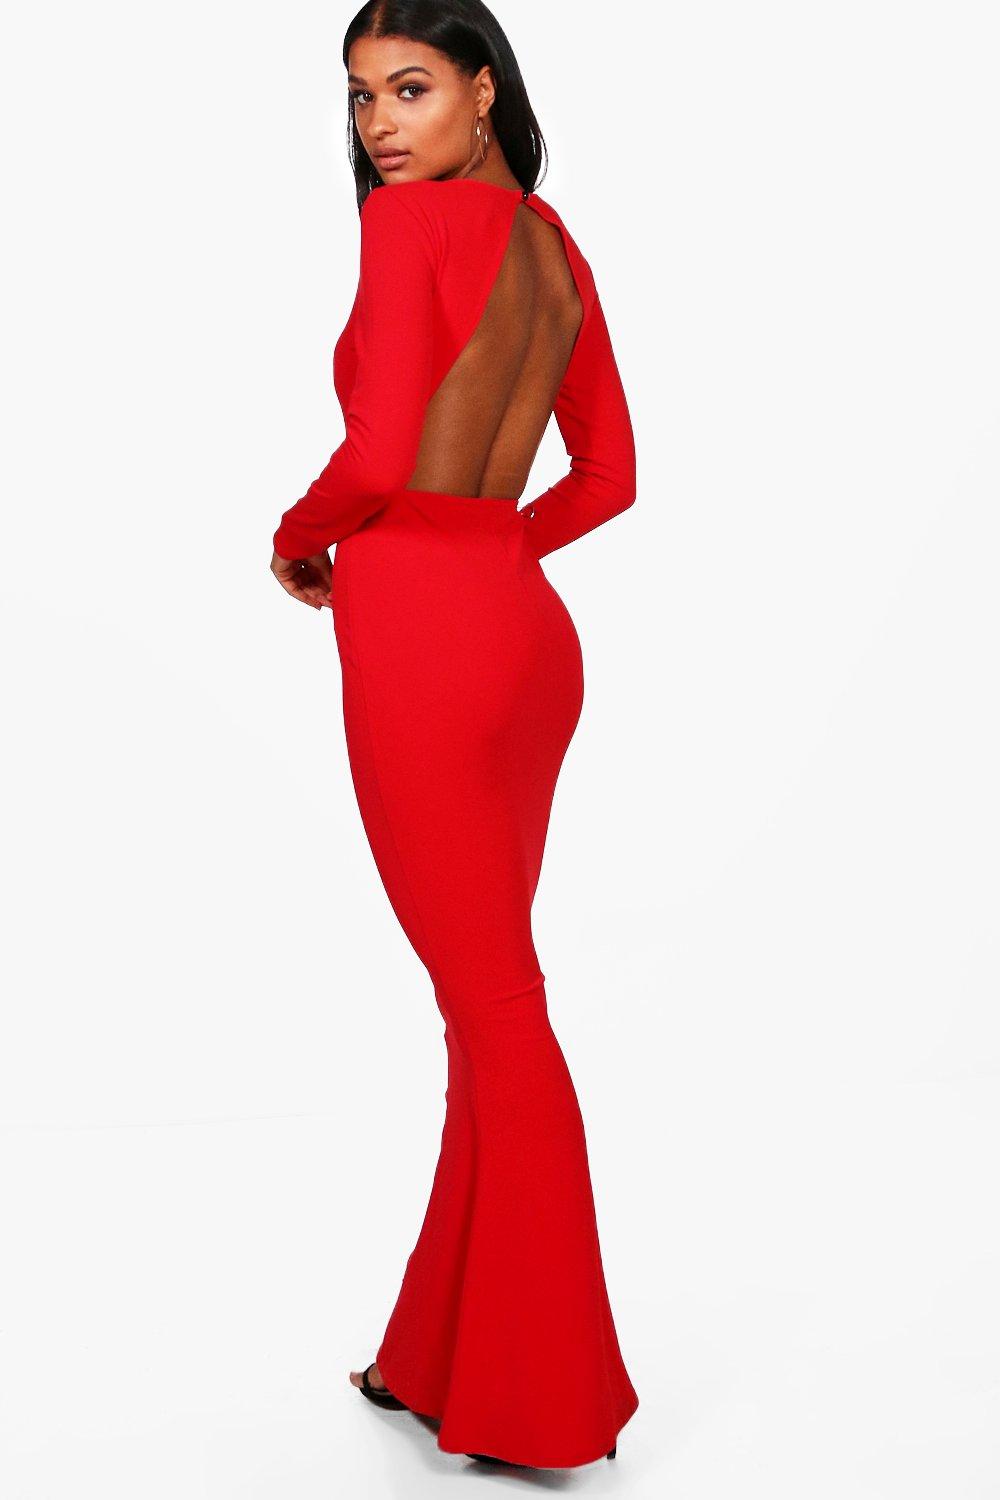 boohoo red long sleeve dress